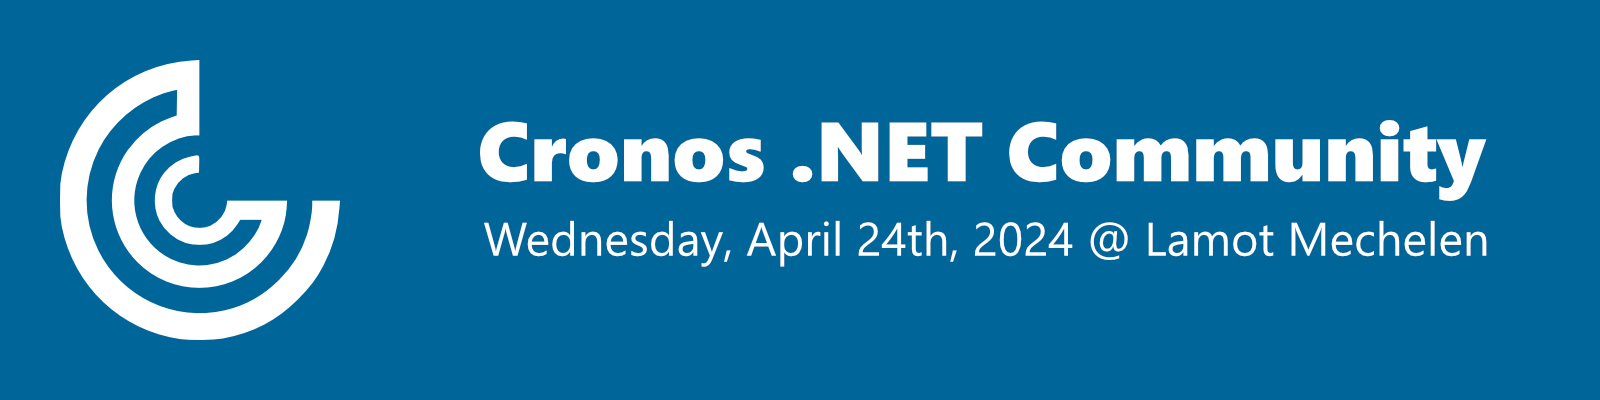 Cronos .NET Community Event